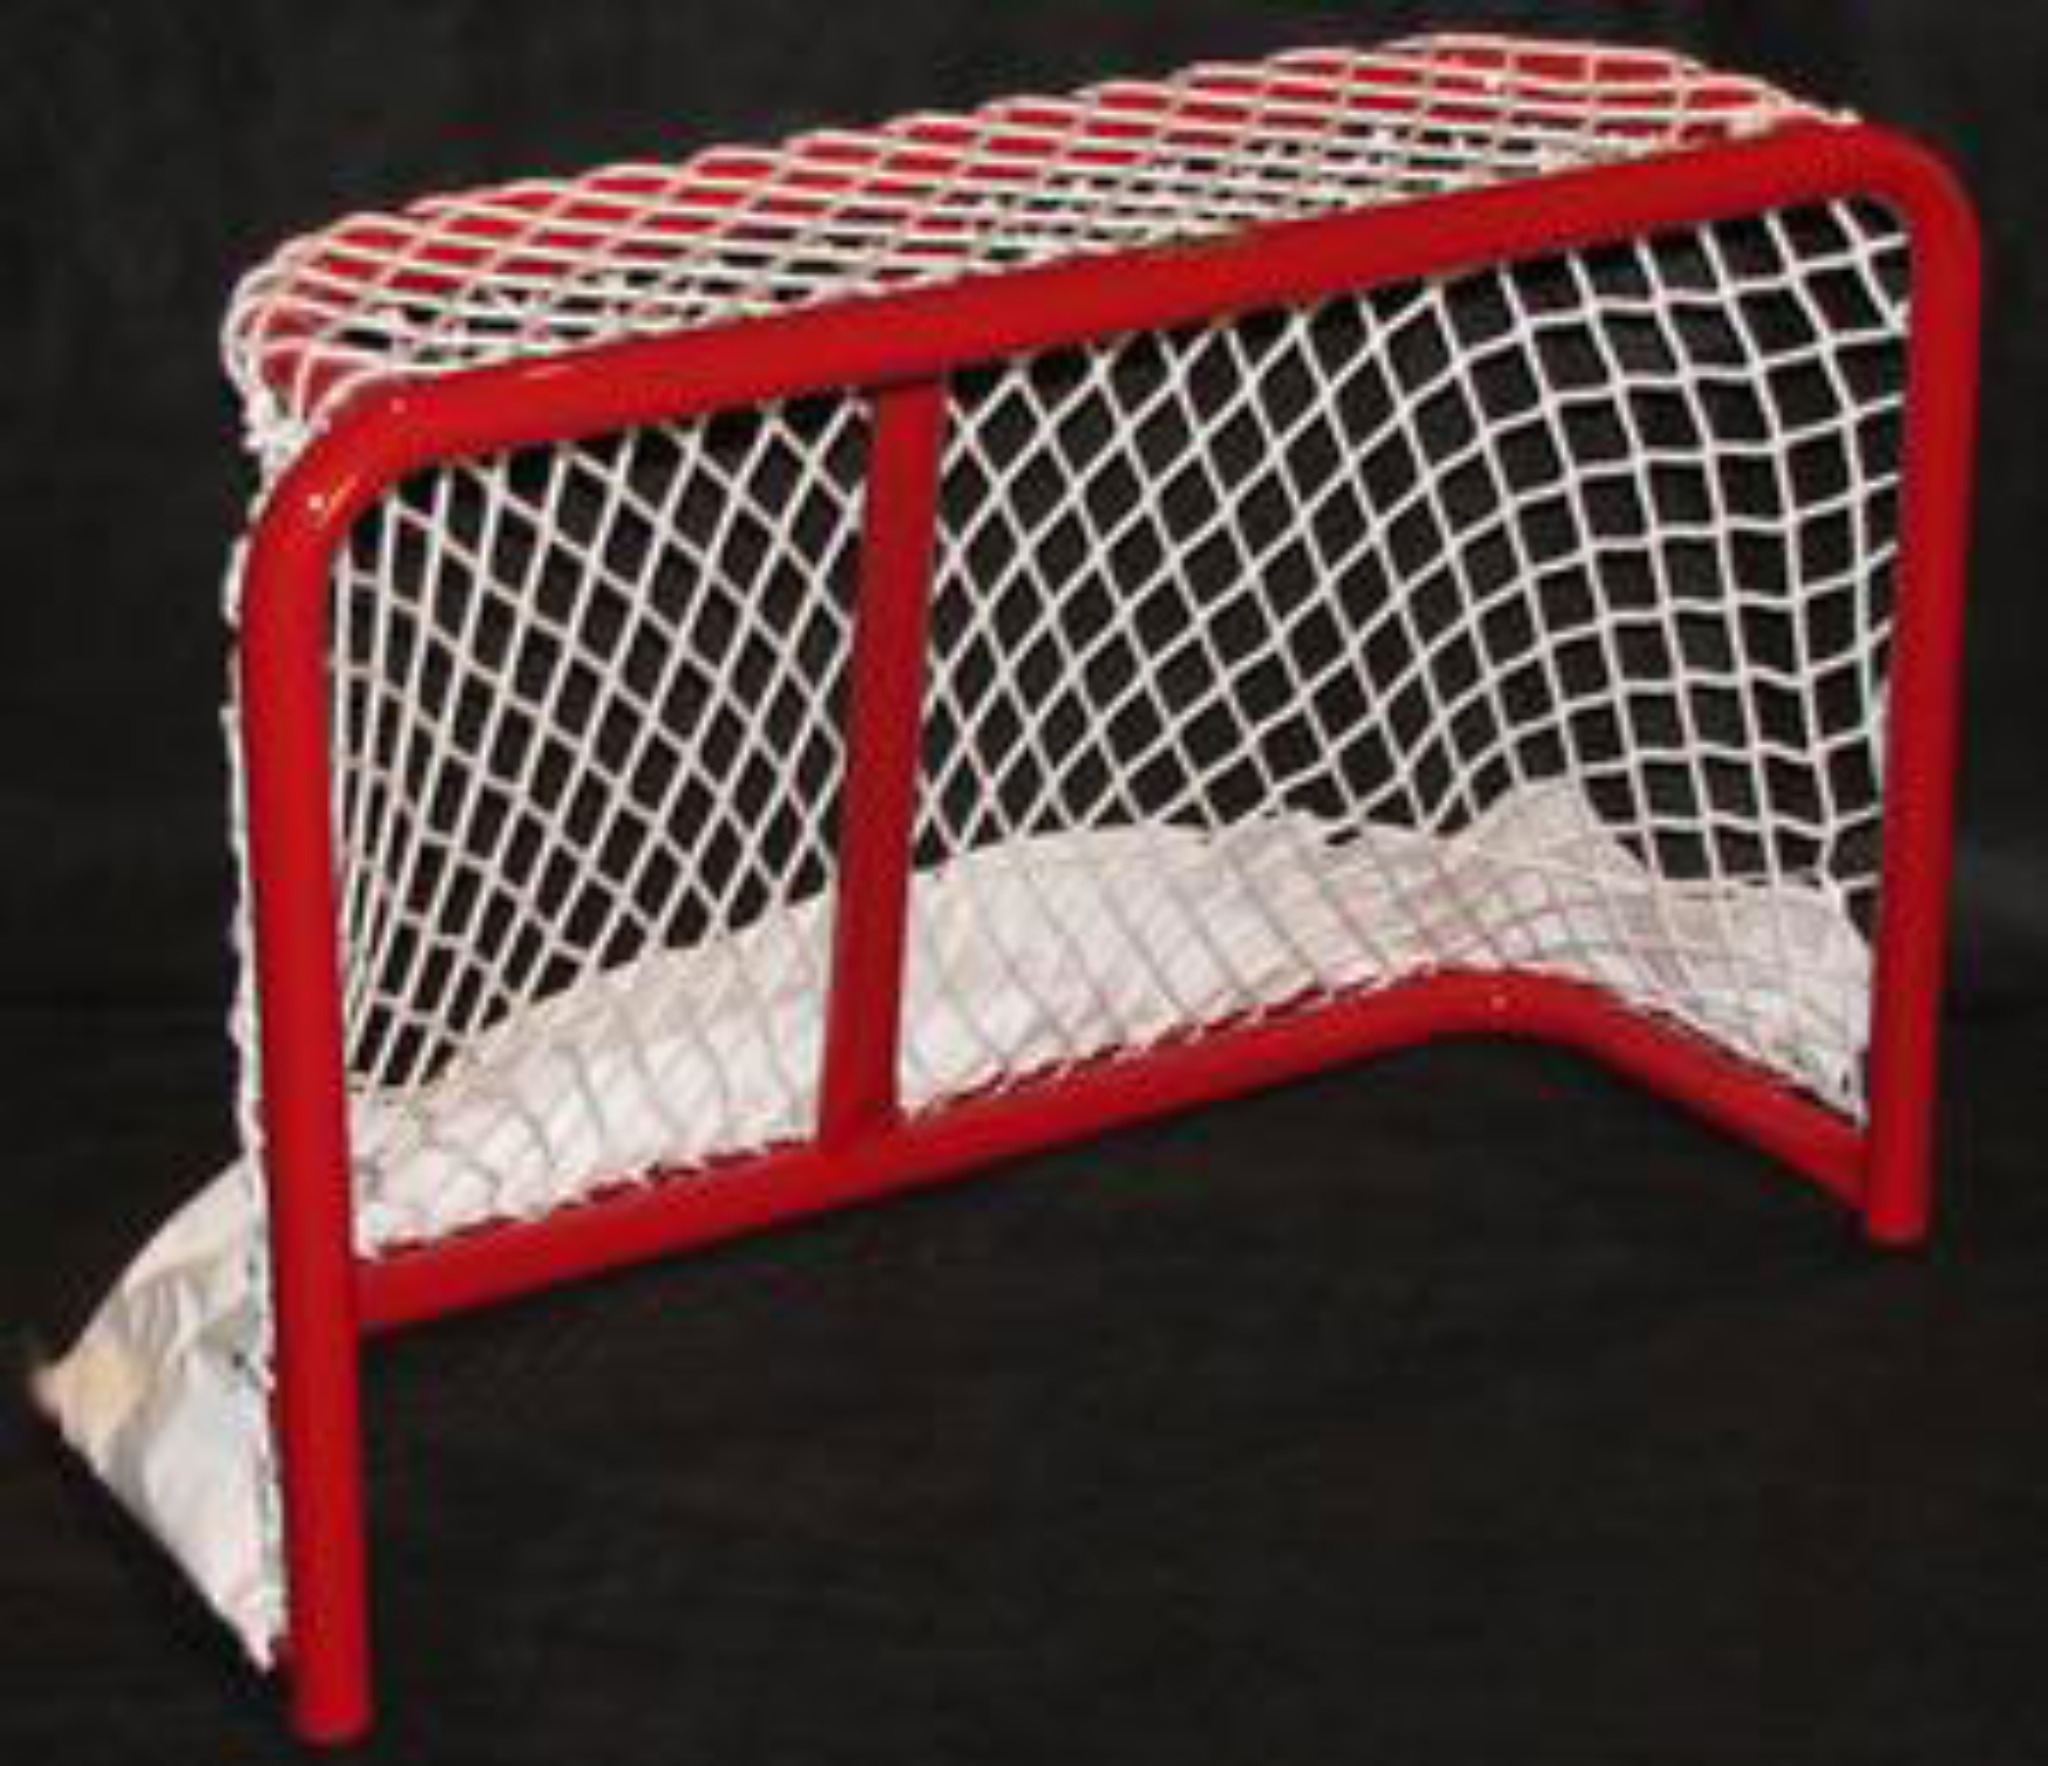 3’ x 2’ Steel Hockey Goal Frame; 20” Rectangular Base Depth; Welded Lacing Bar for Attaching Net; Red Powder-Coated Finish; Age 6U Players, No Goalie.